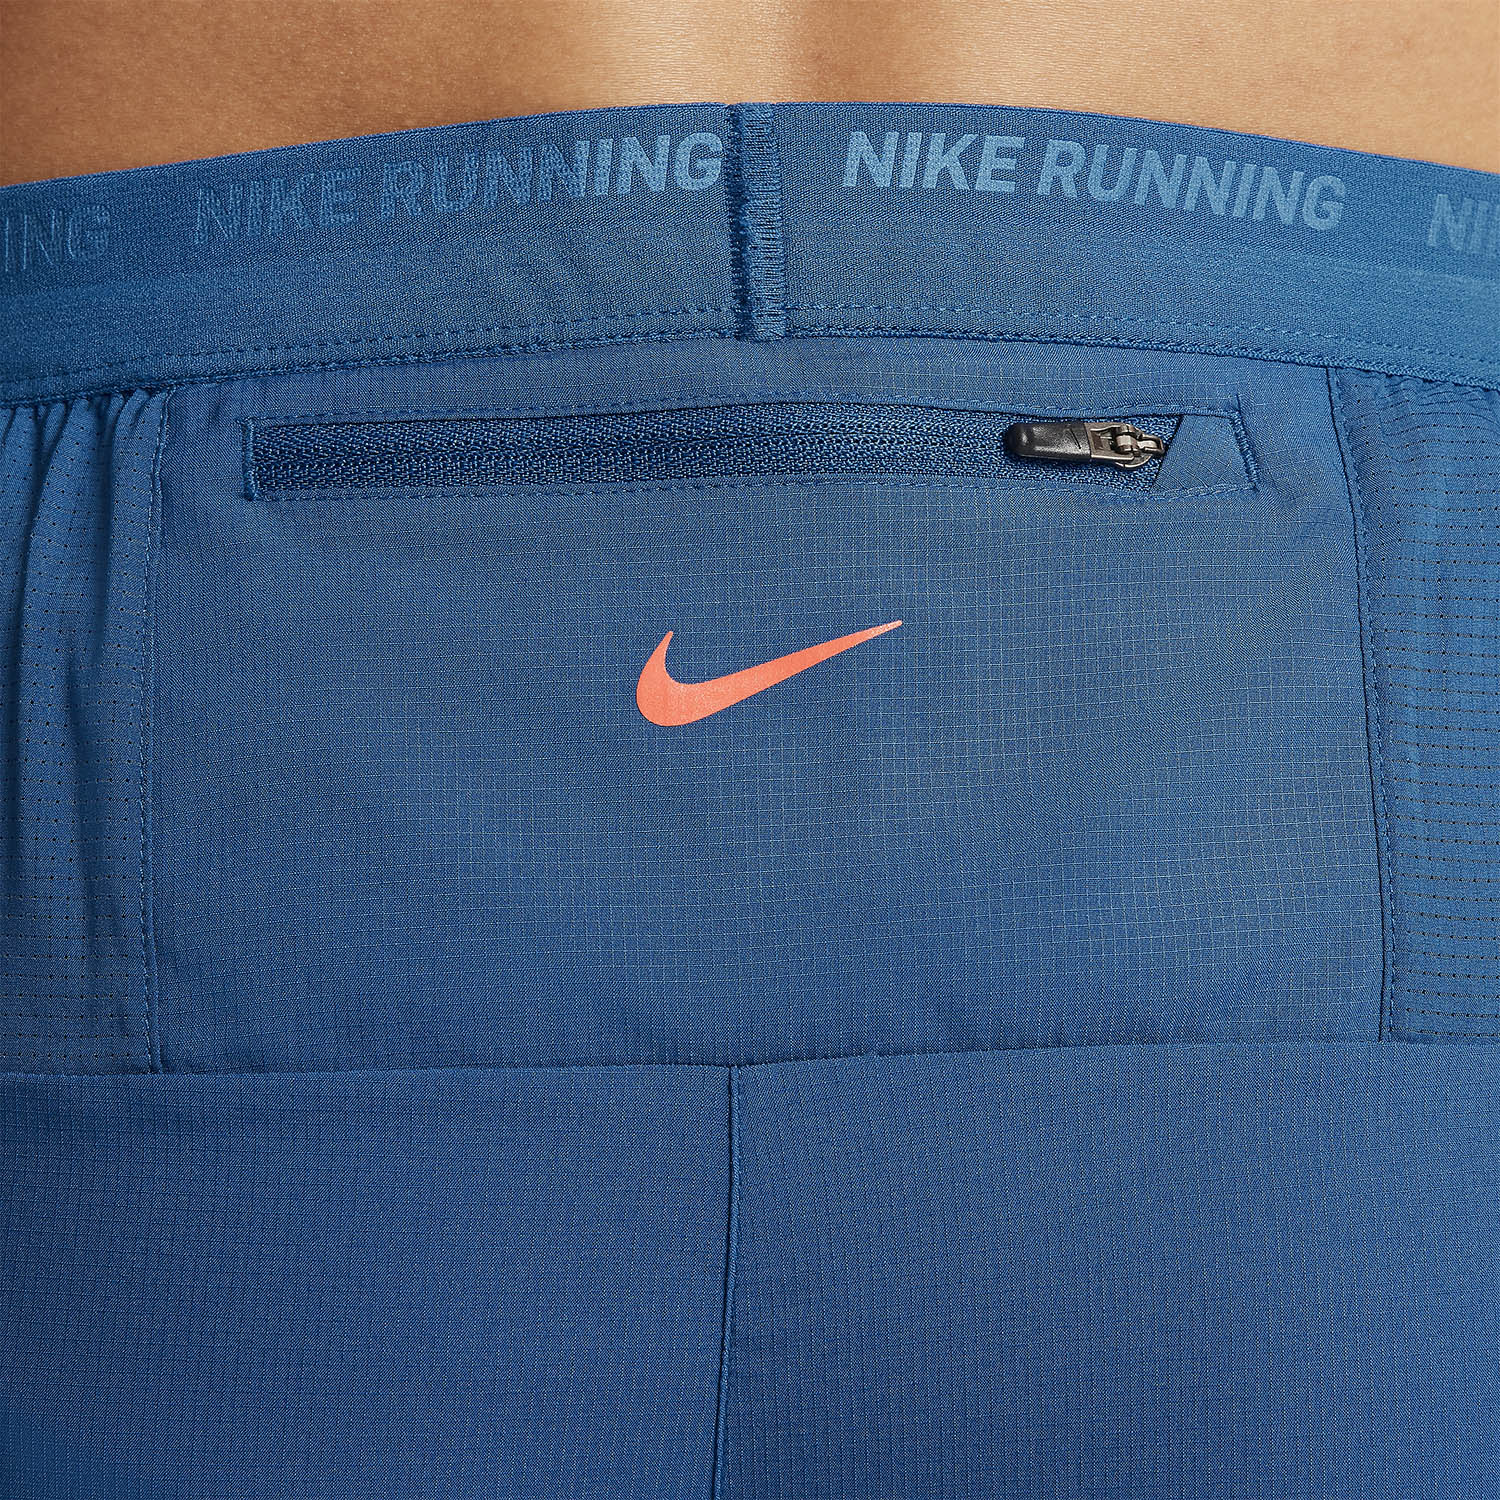 Nike Run Division Repel 2 in 1 7in Shorts - Black